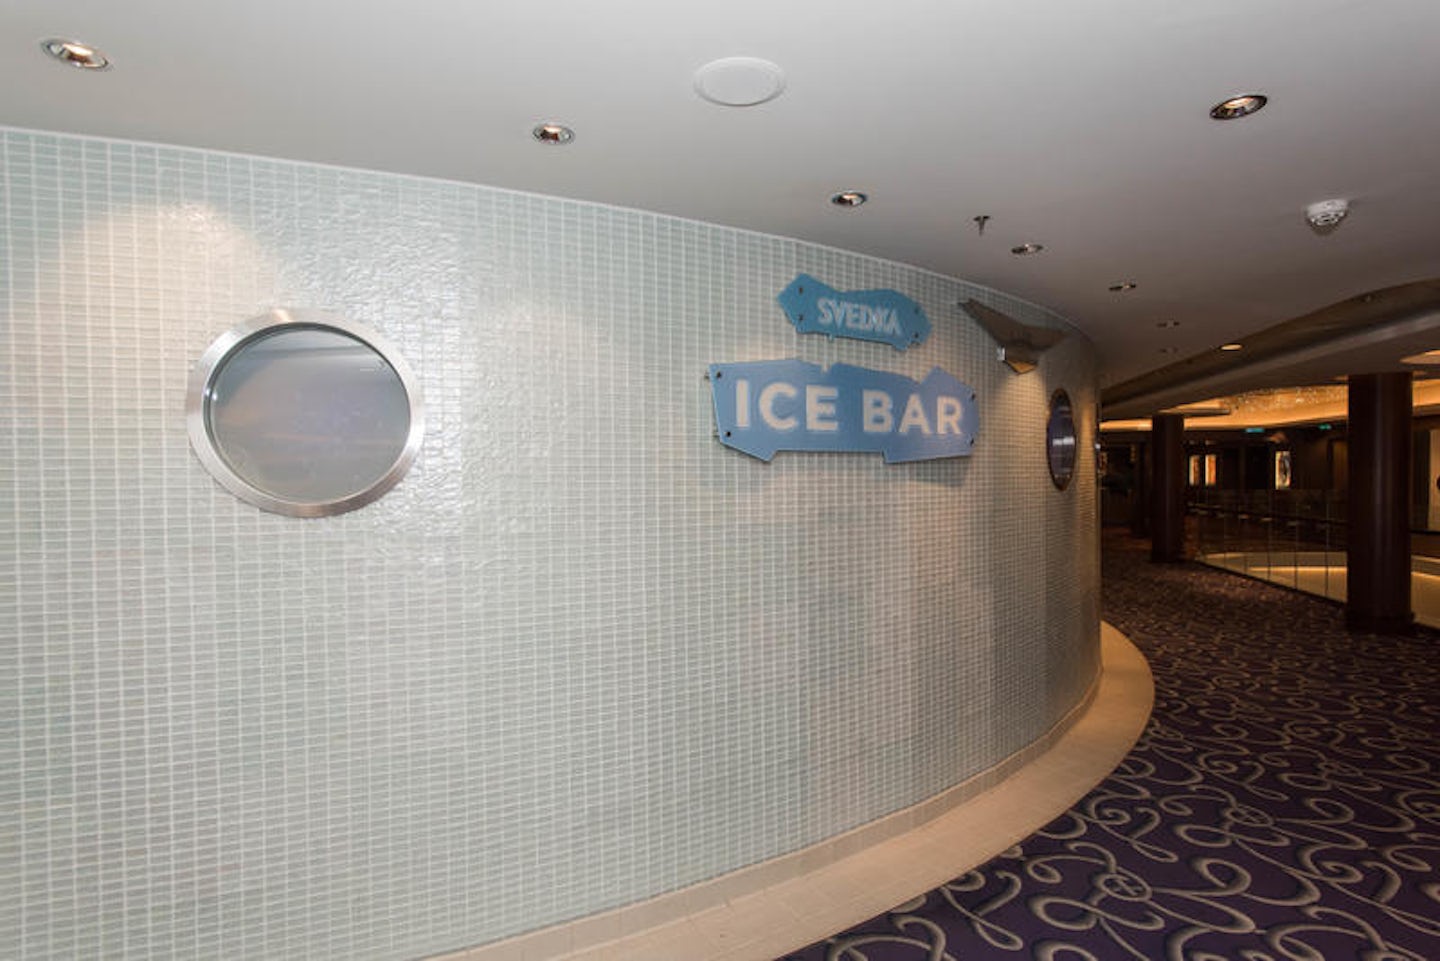 Svedka Ice Bar on Norwegian Epic